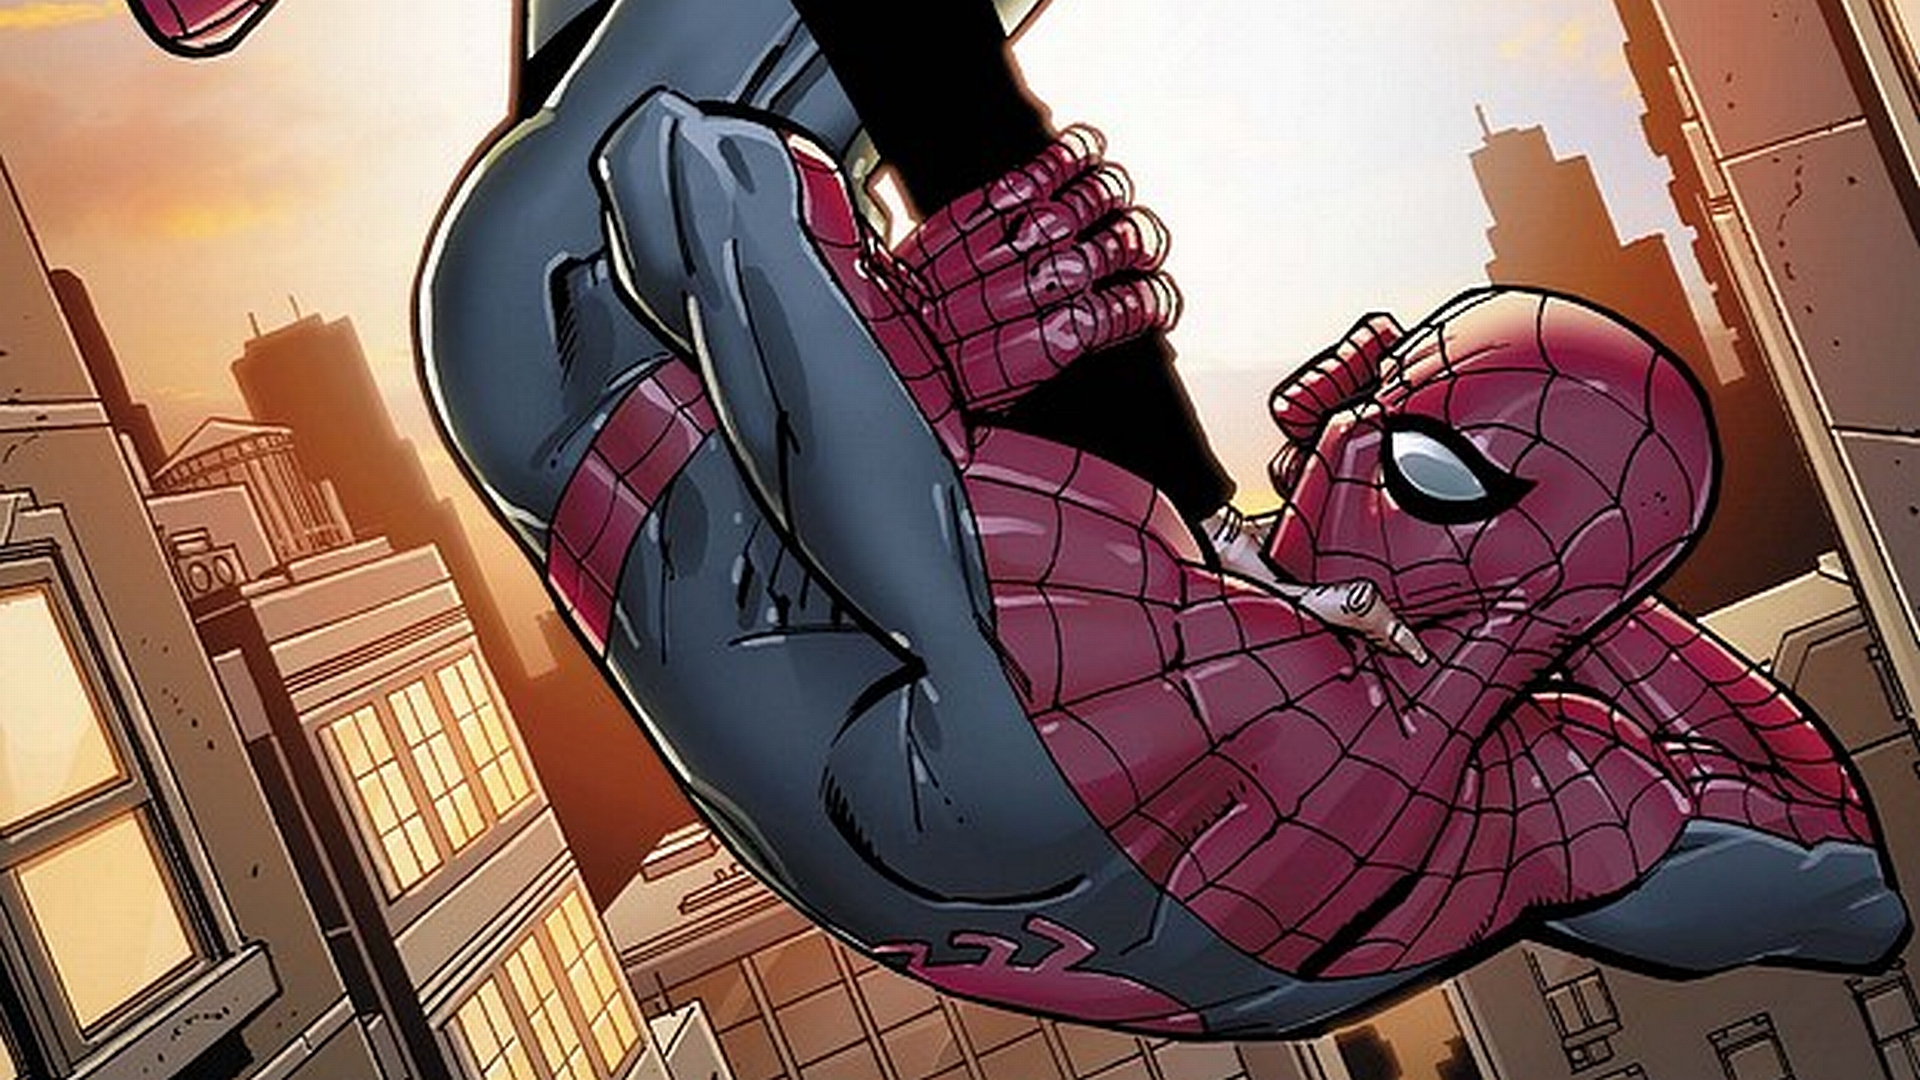 Spider-Man comic book illustration